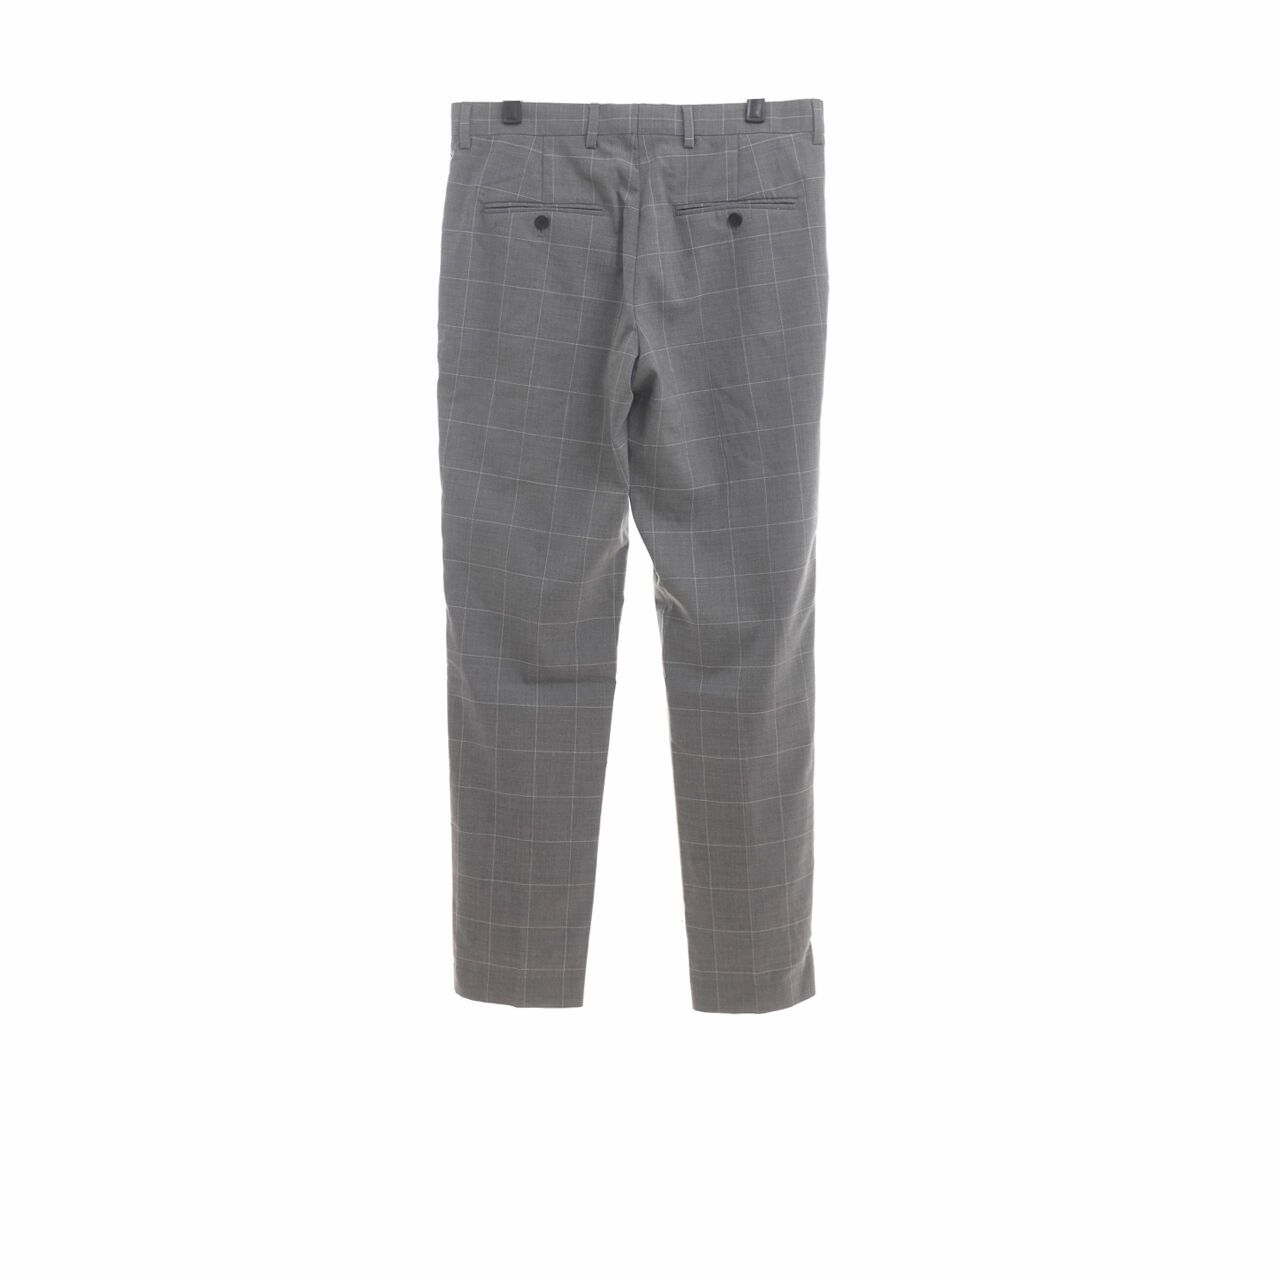 H&M Grey Plaid Long Pants